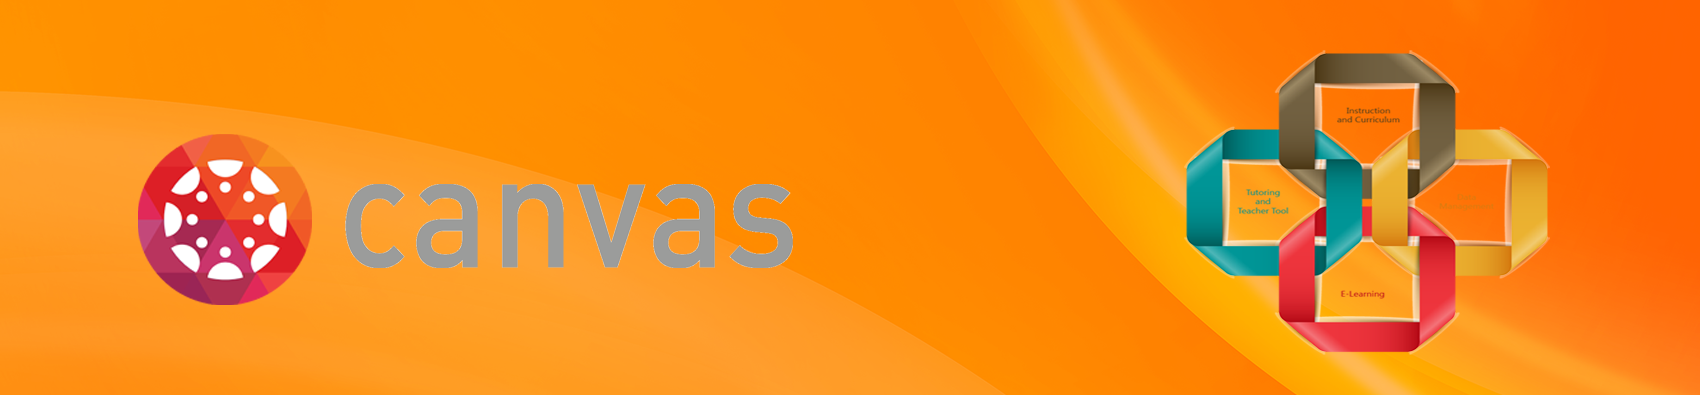 canvas-lms-development-service